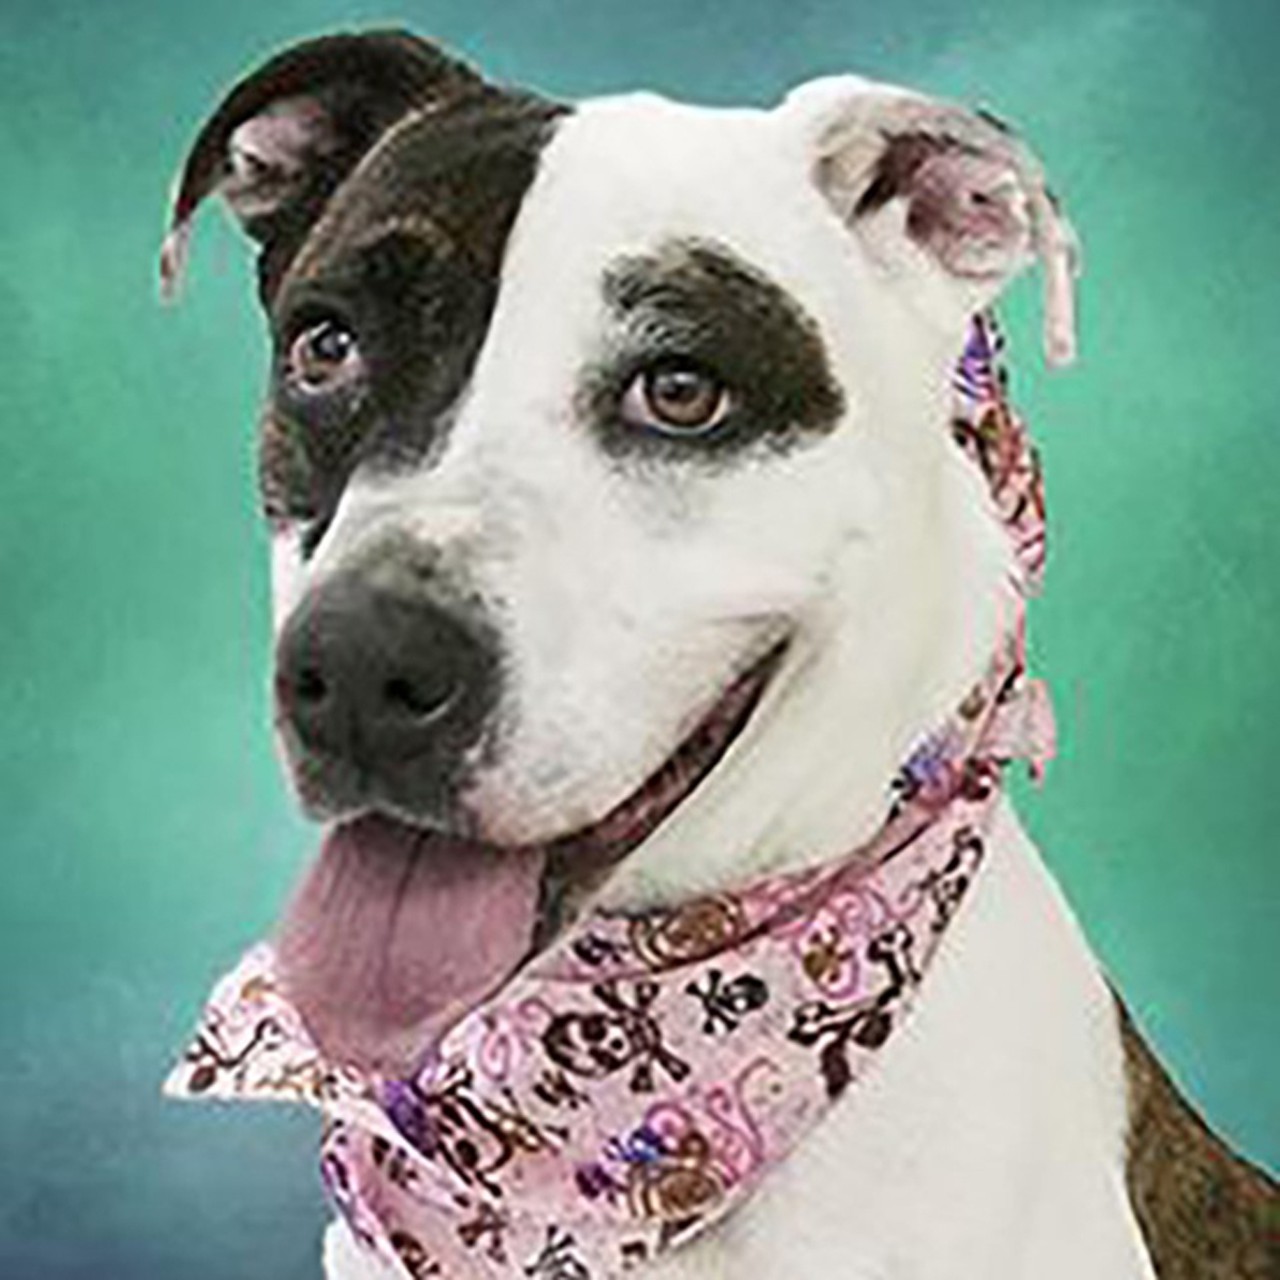 Brandi
Age: 5 years old | Breed: Terrier, American Pit Bull/Mix | Sex: Female | Rescue: SPCA Cincinnati 
Photo via spcacincinnati.org